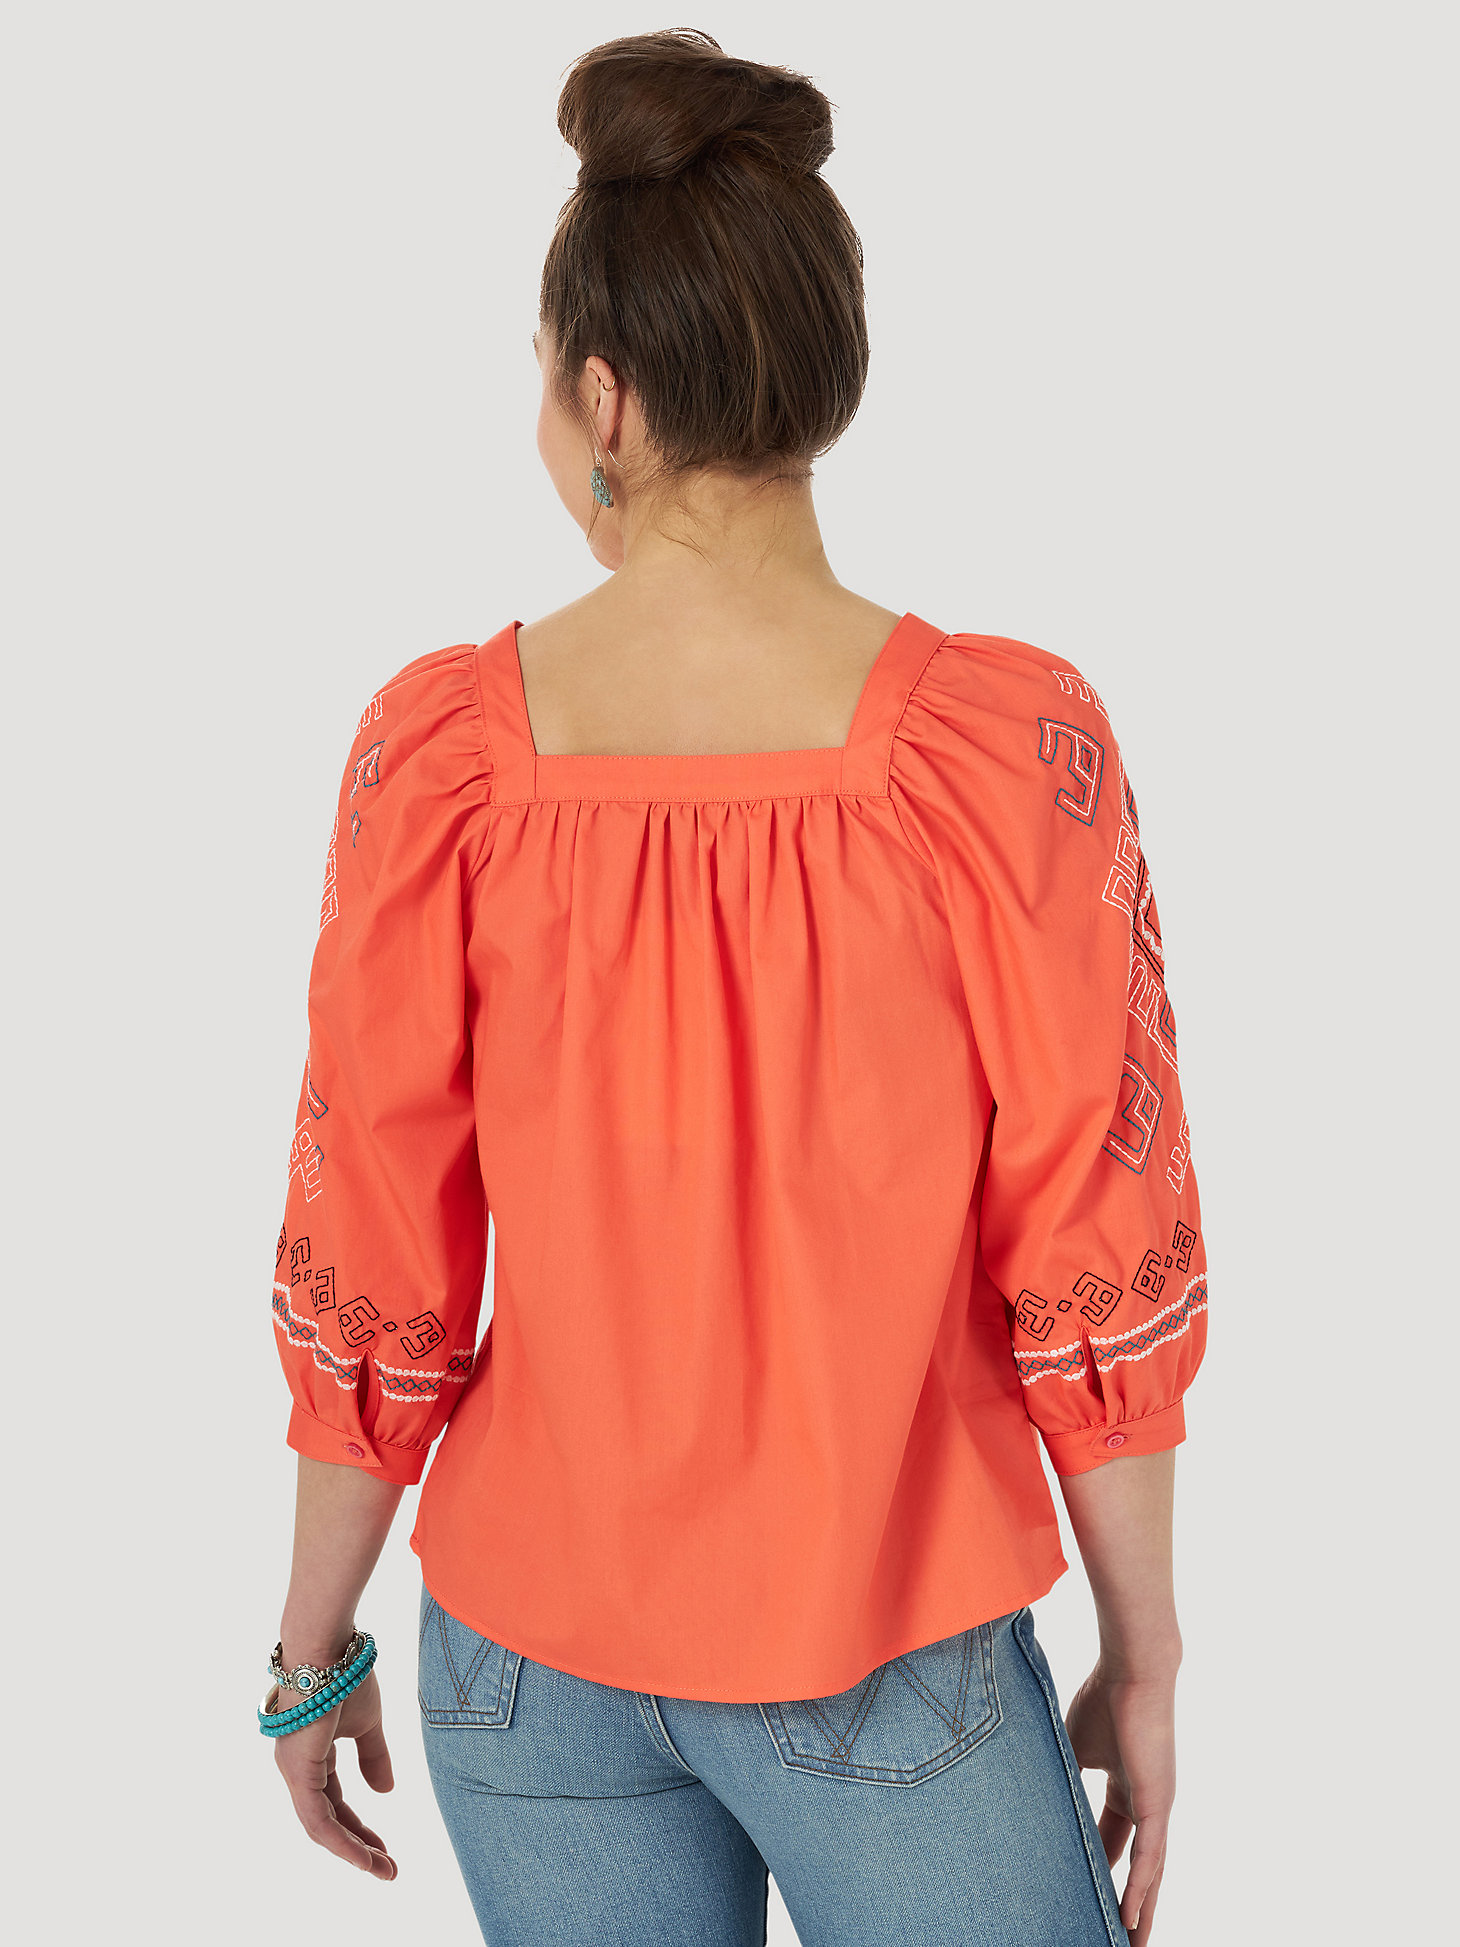 Women's Embroidered Sleeve Top in Orange alternative view 1